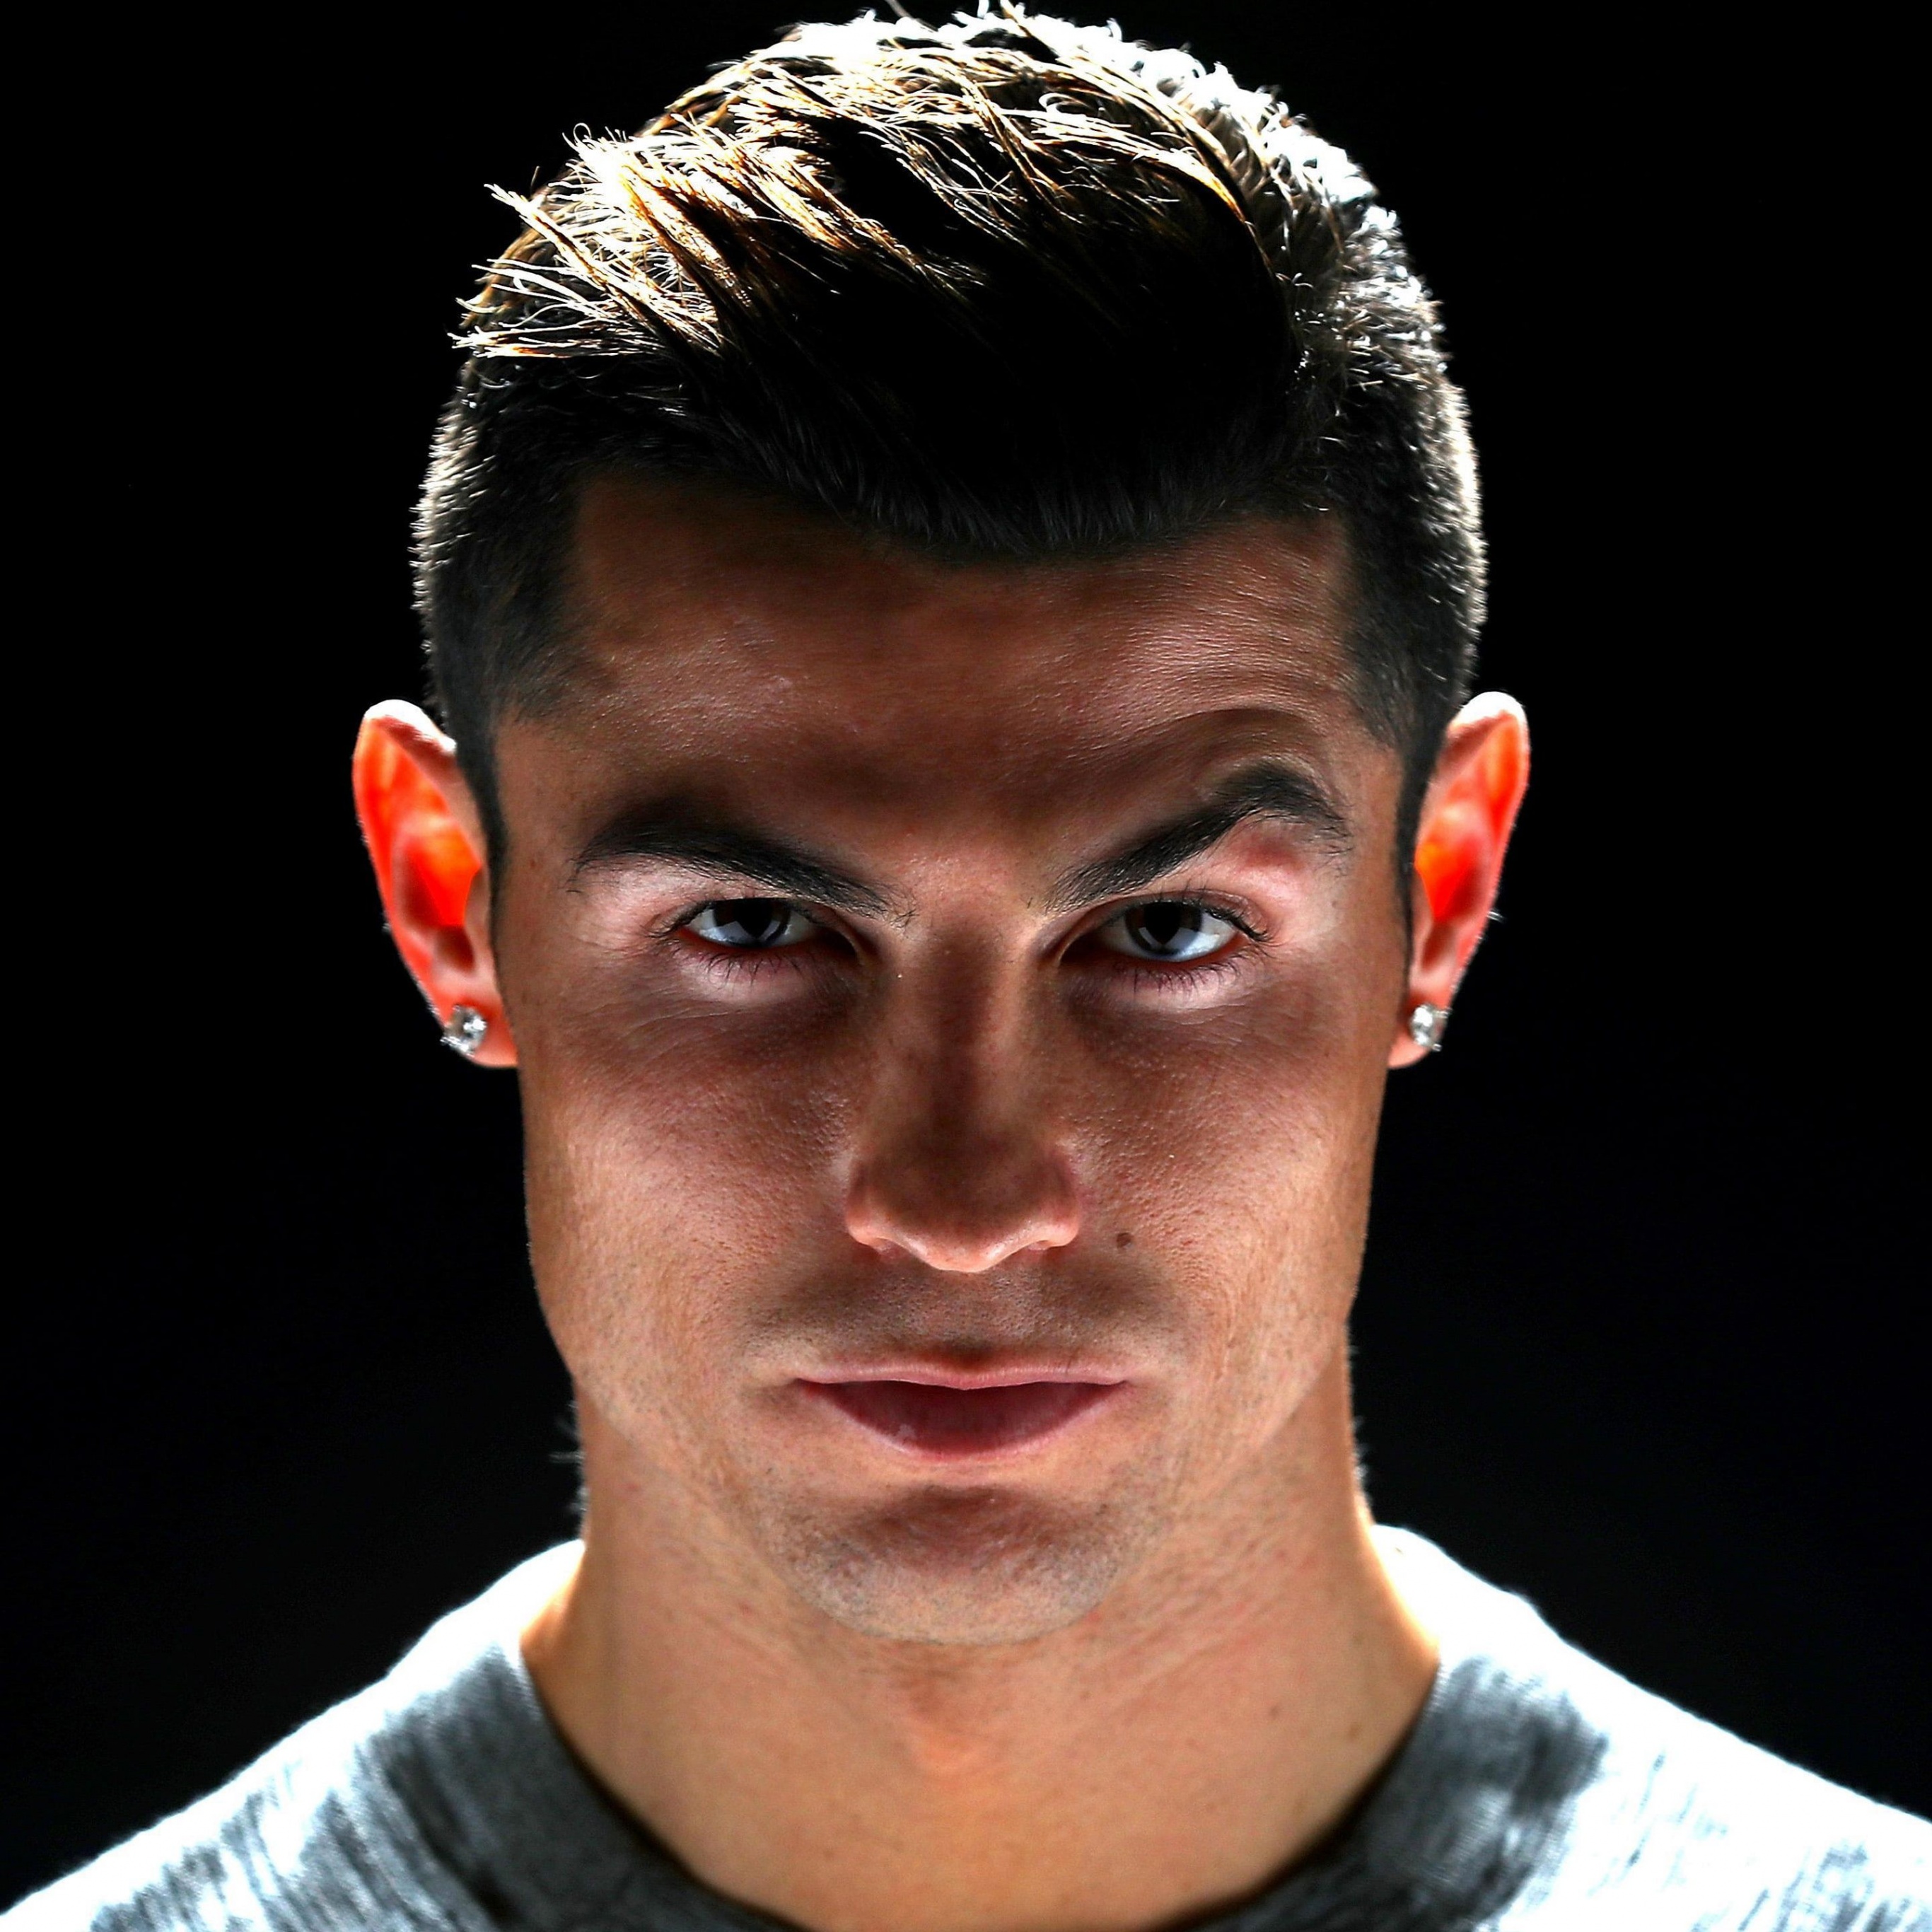 Download Athlete Cristiano Ronaldo Hd 4k Wallpaper | Wallpapers.com